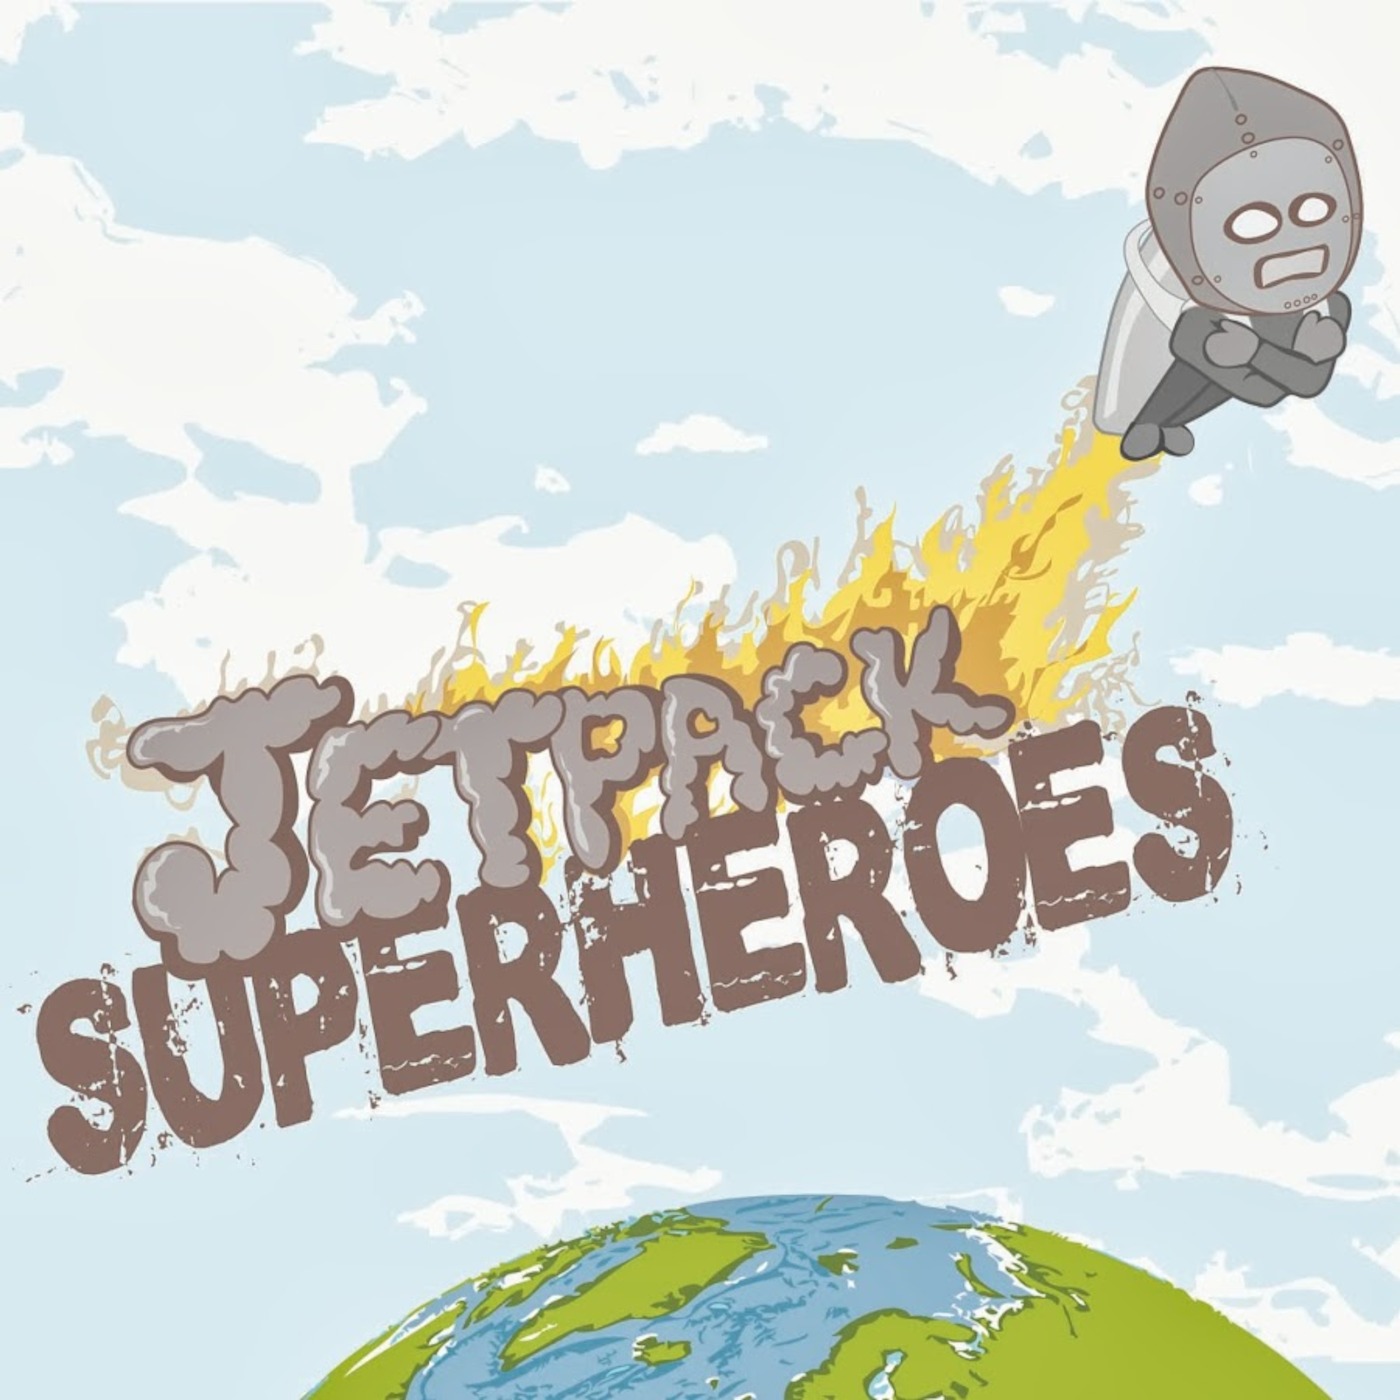 Jetpack Supercast